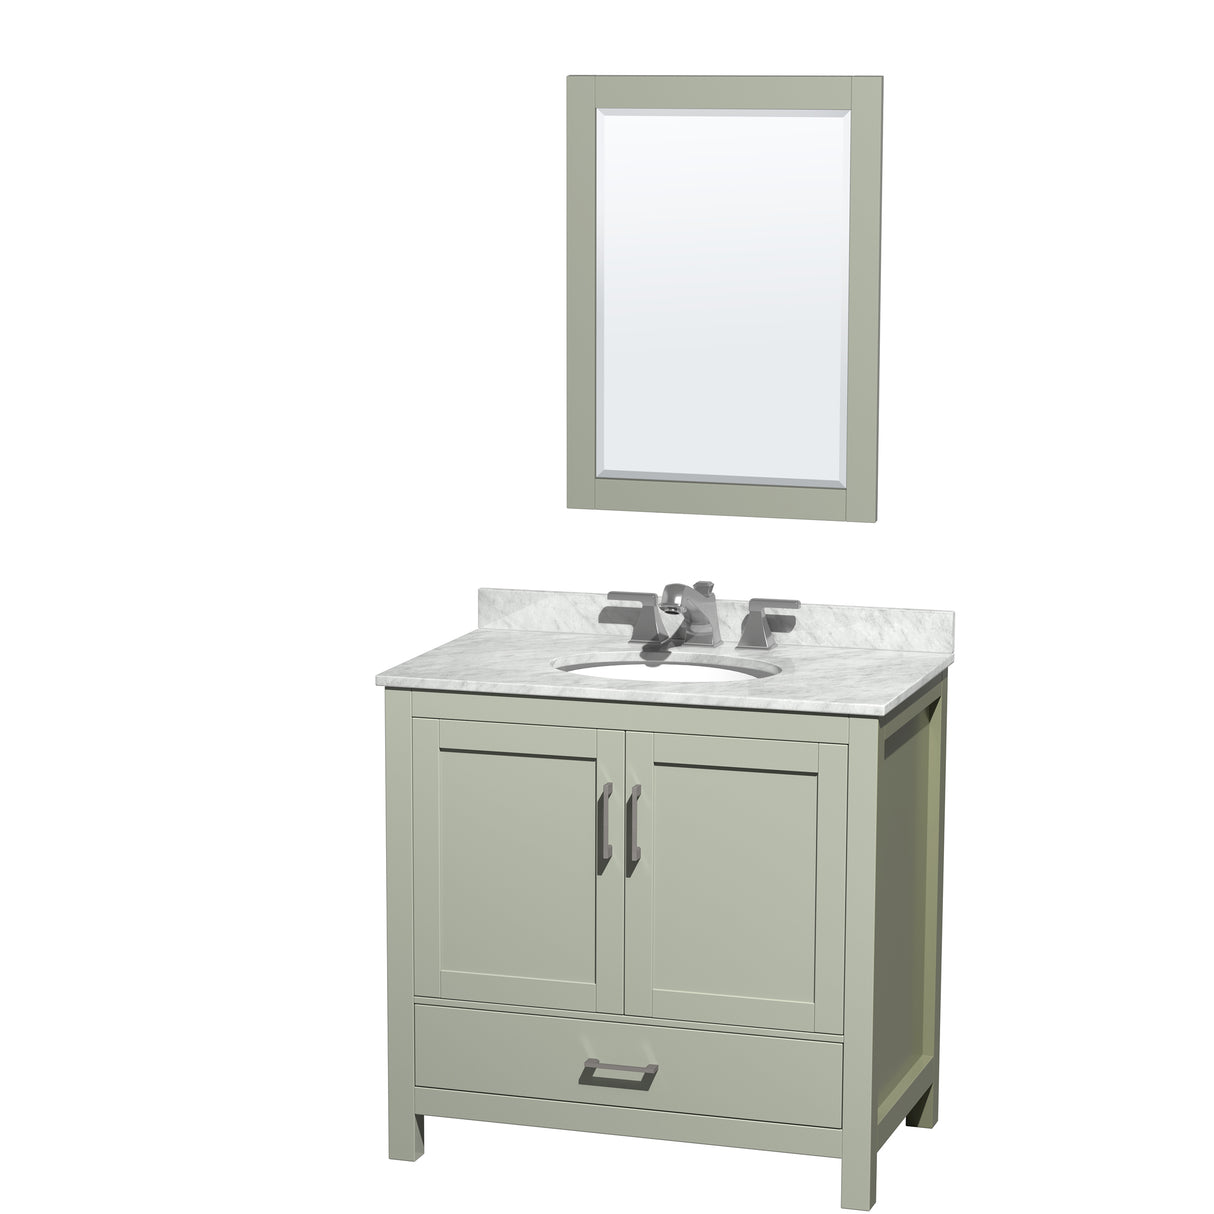 Sheffield 36 inch Single Bathroom Vanity in Light Green White Carrara Marble Countertop Undermount Oval Sink Brushed Nickel Trim 24 inch Mirror